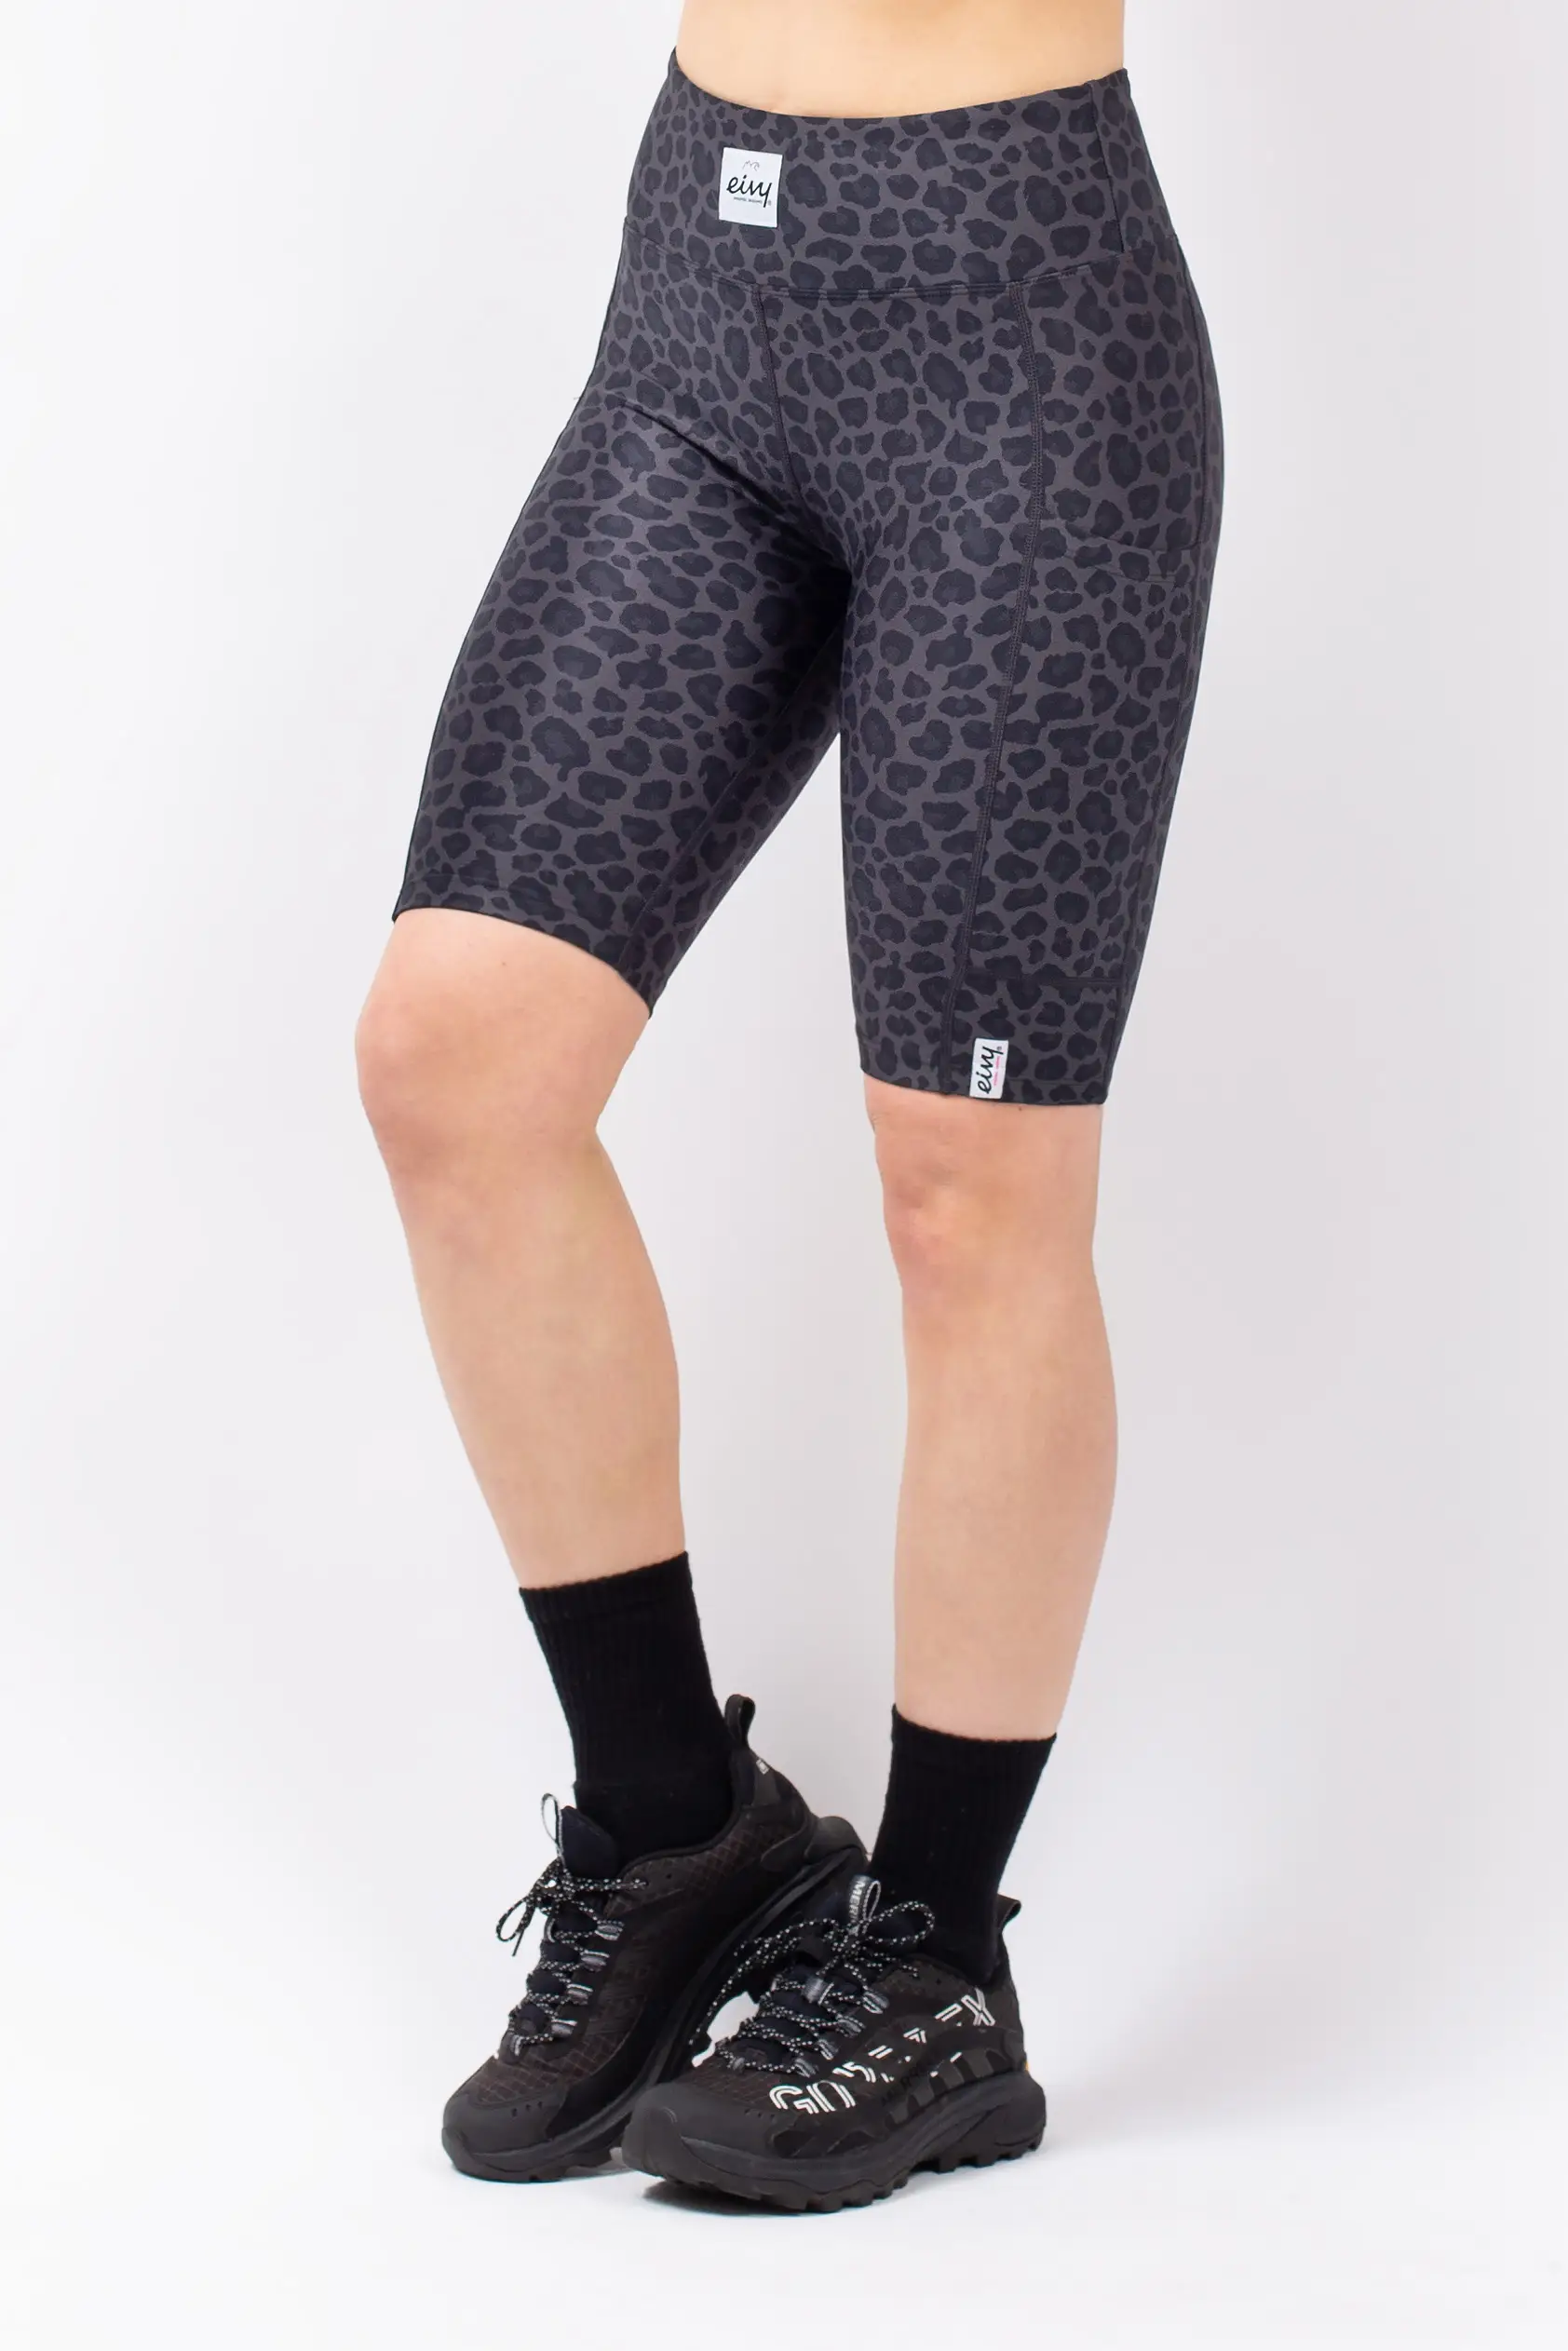 Venture Biker Shorts - Black Leopard